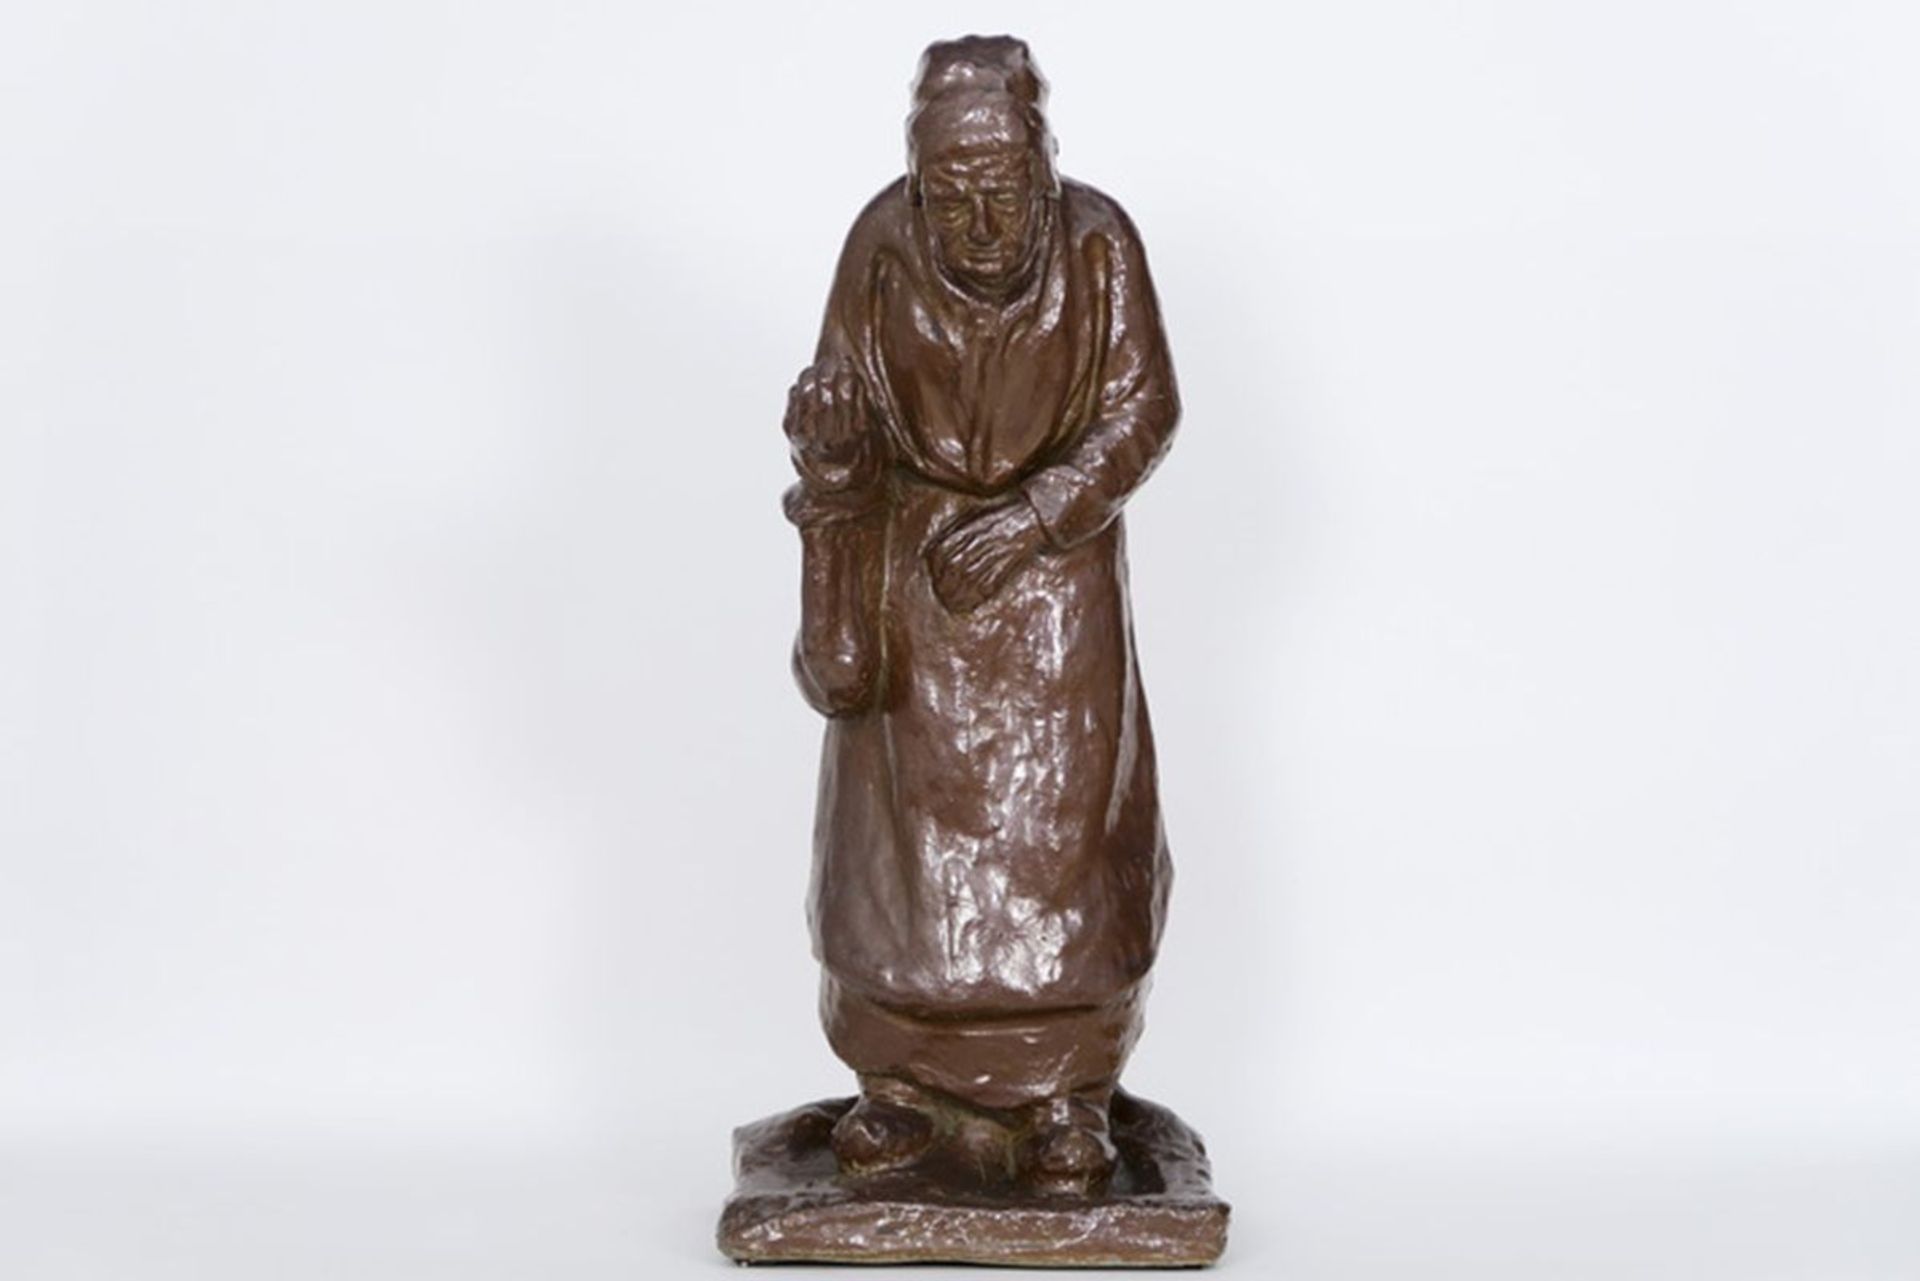 CRACO ARTHUR (1869 - 1955) vrij grote sculptuur in aardewerk getiteld "Mendiante" met [...] - Bild 2 aus 5